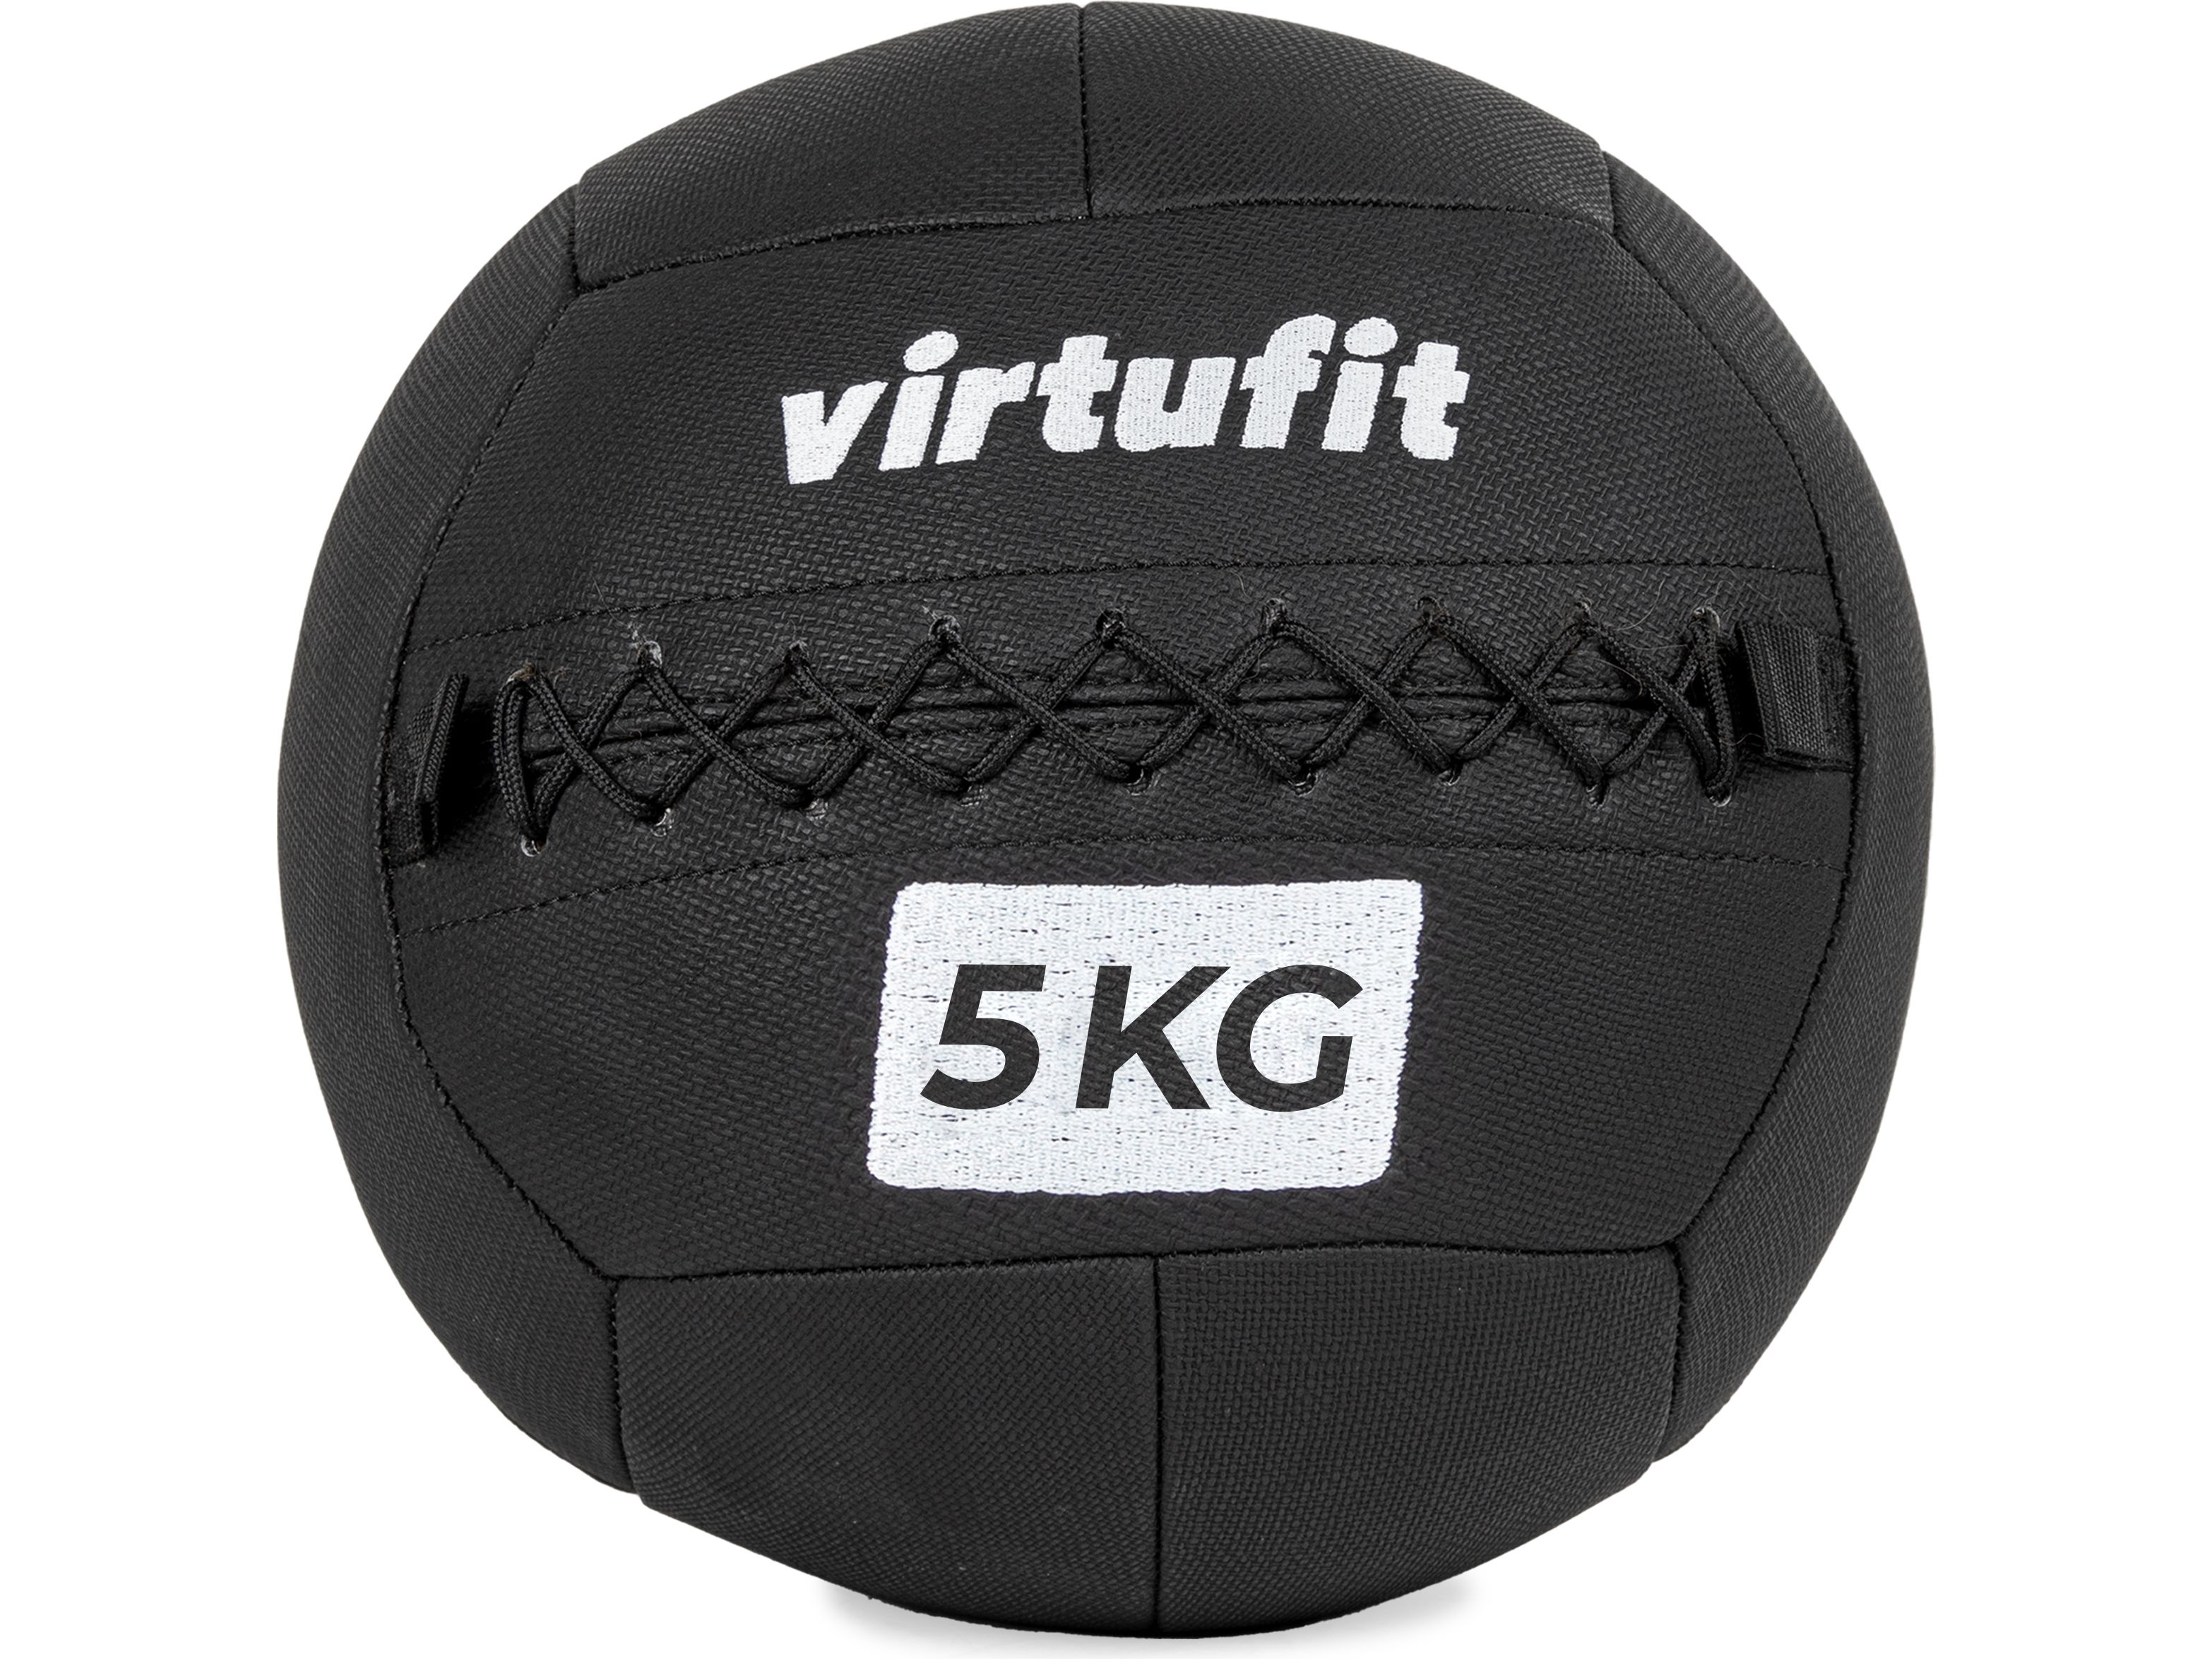 virtufit-premium-wall-ball-5-kg